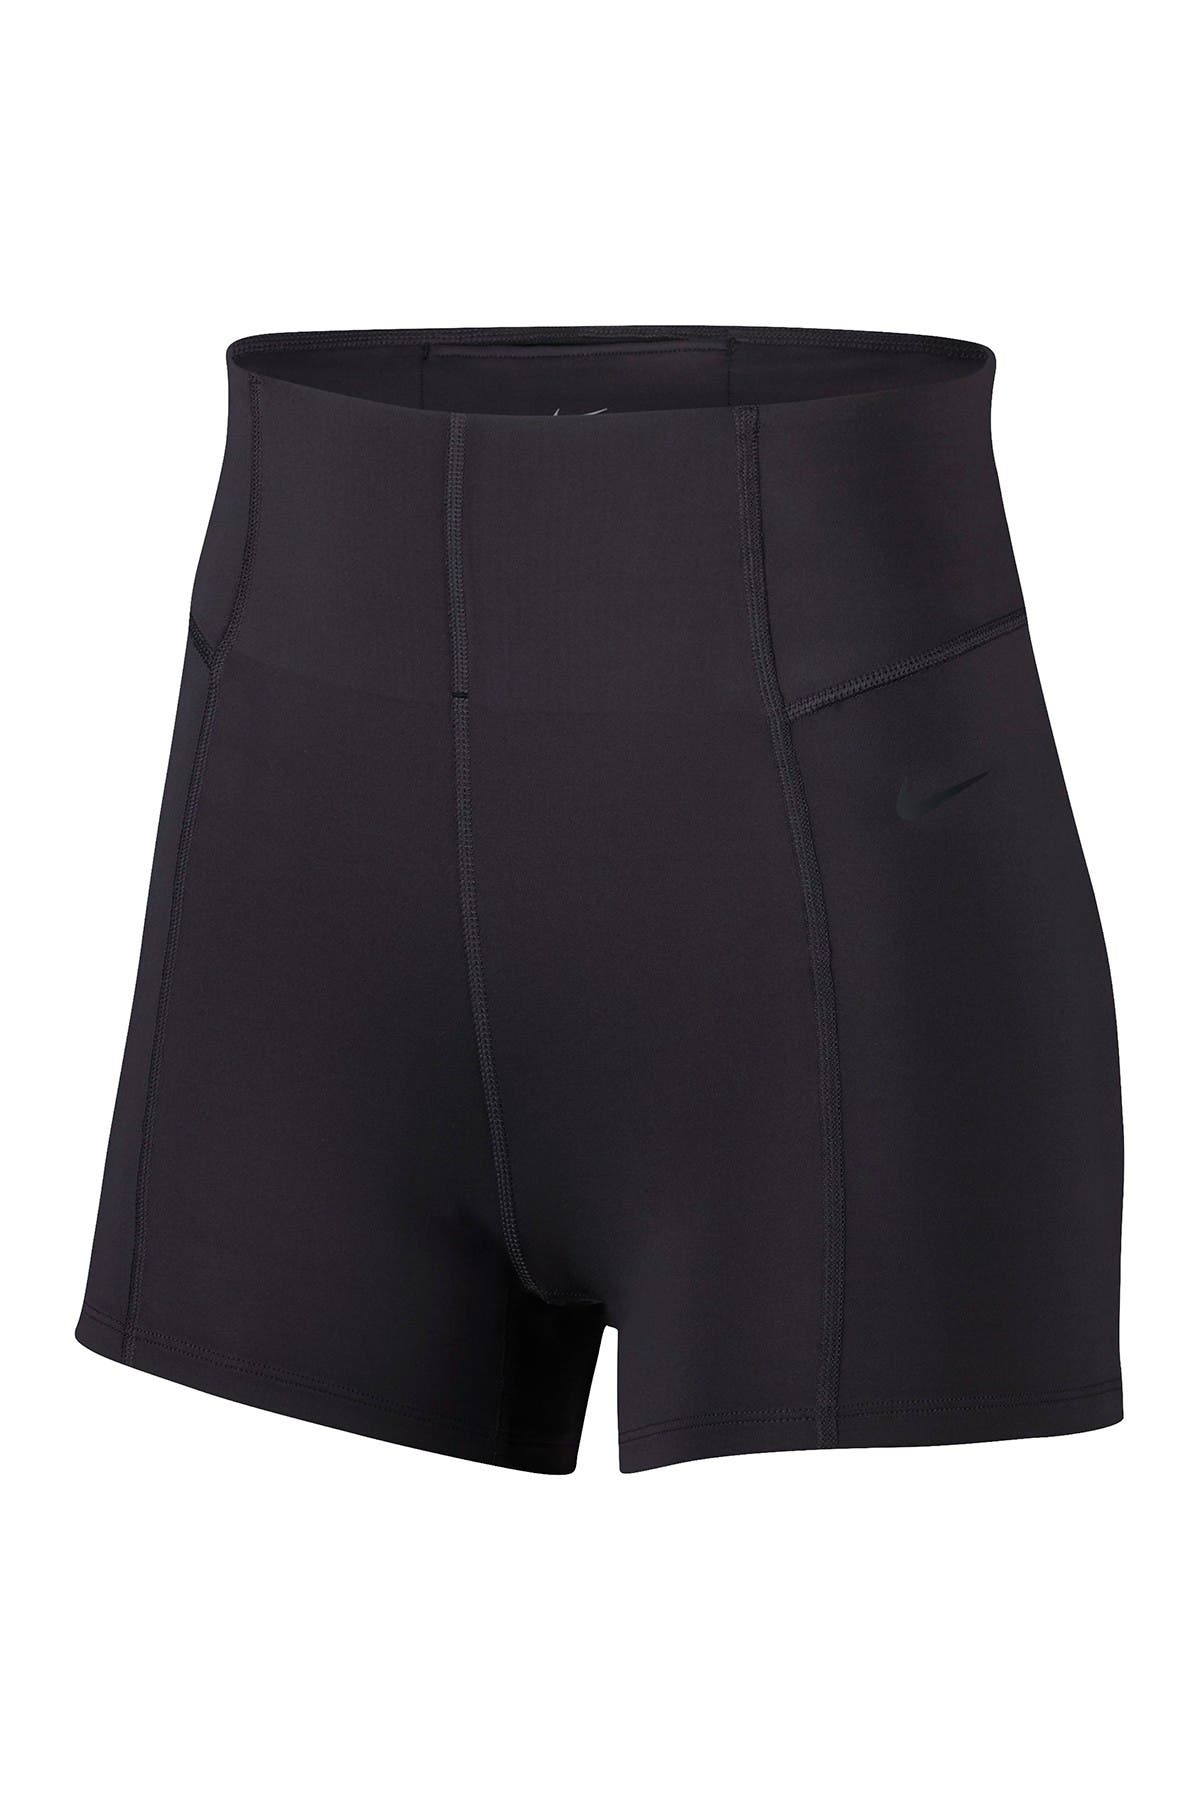 Nike | Vinyasa Dry Shorts | Nordstrom Rack